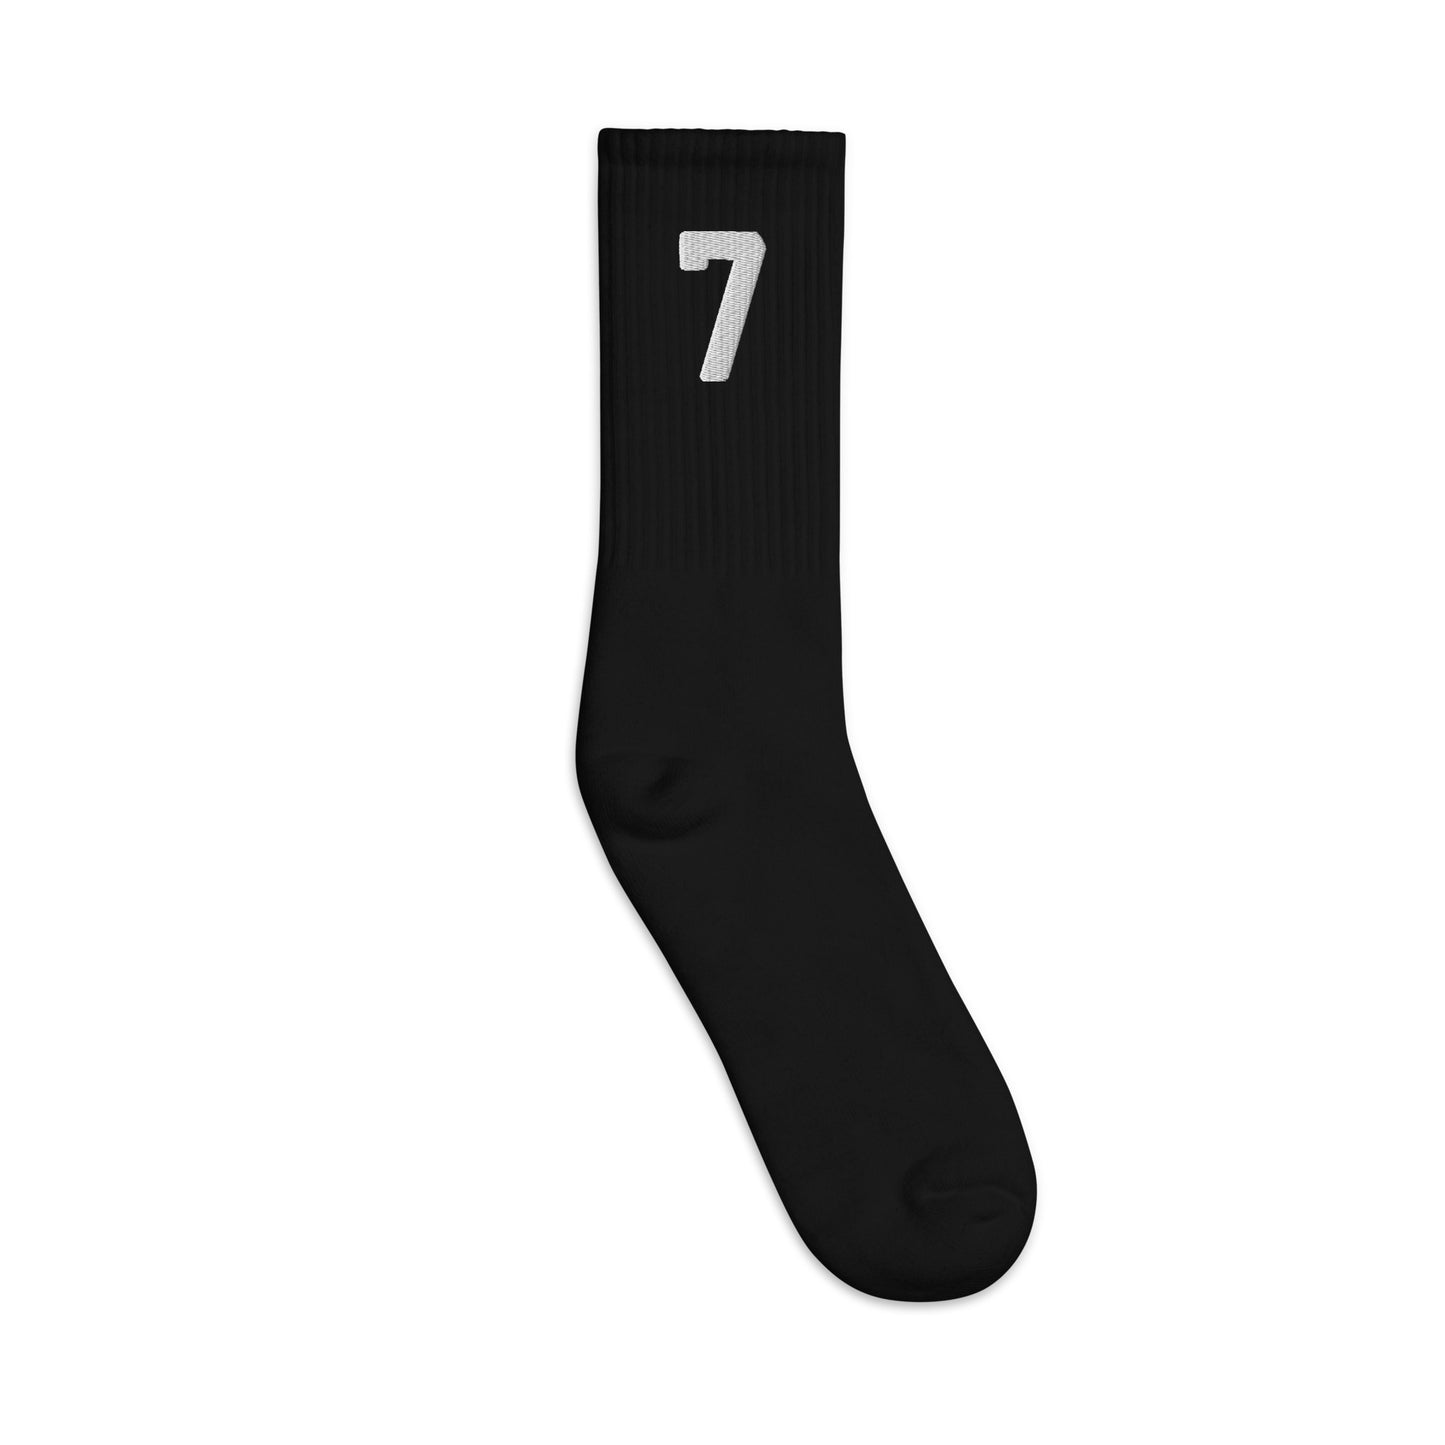 Number 7 - Embroidered socks